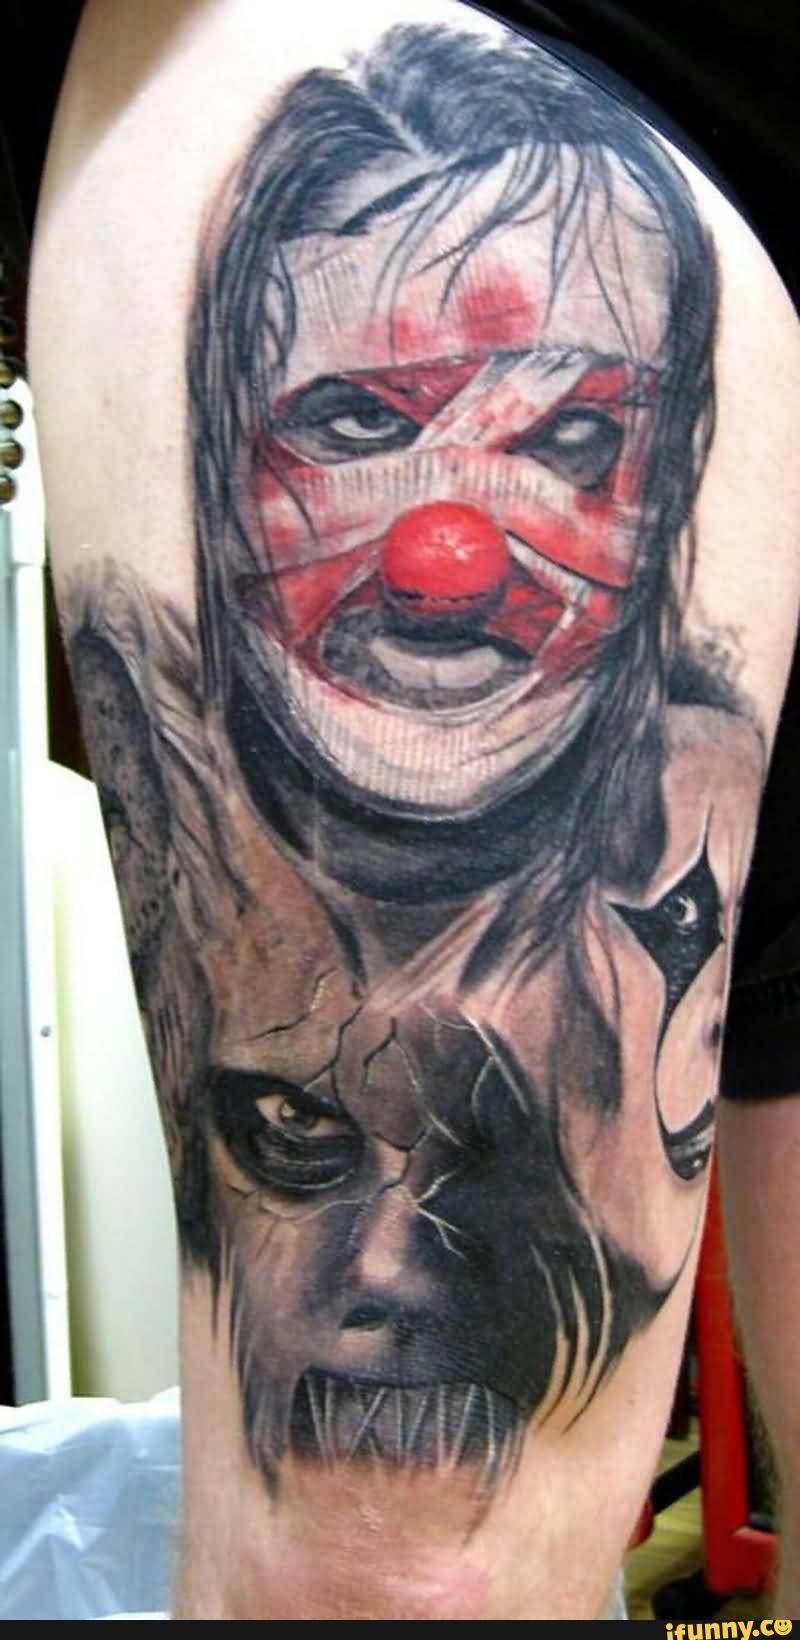 Nice Slipknot Member Faces Tattoo On Thigh